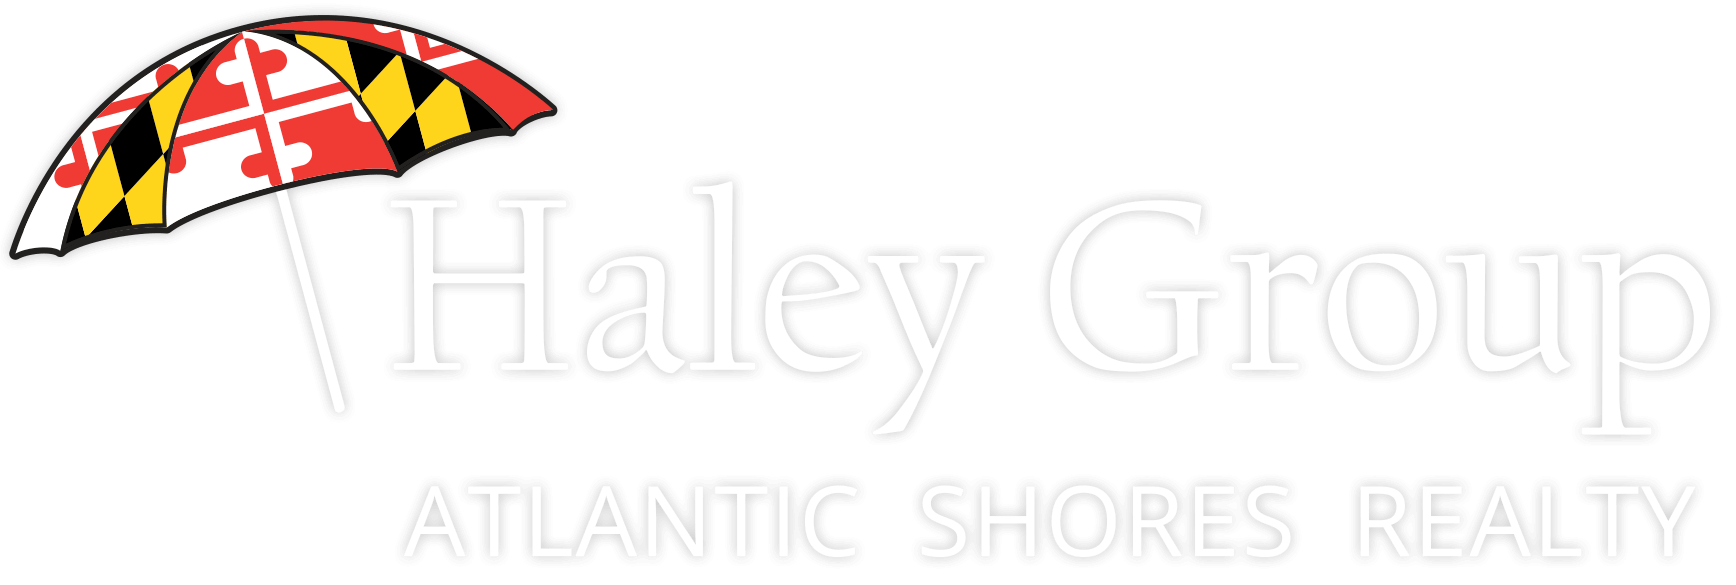 Ocean City Maryland Real Estate Condos, Ryan Haley Realtor, Oceanfront and Waterfront Properties - Atlantic Shores Realty